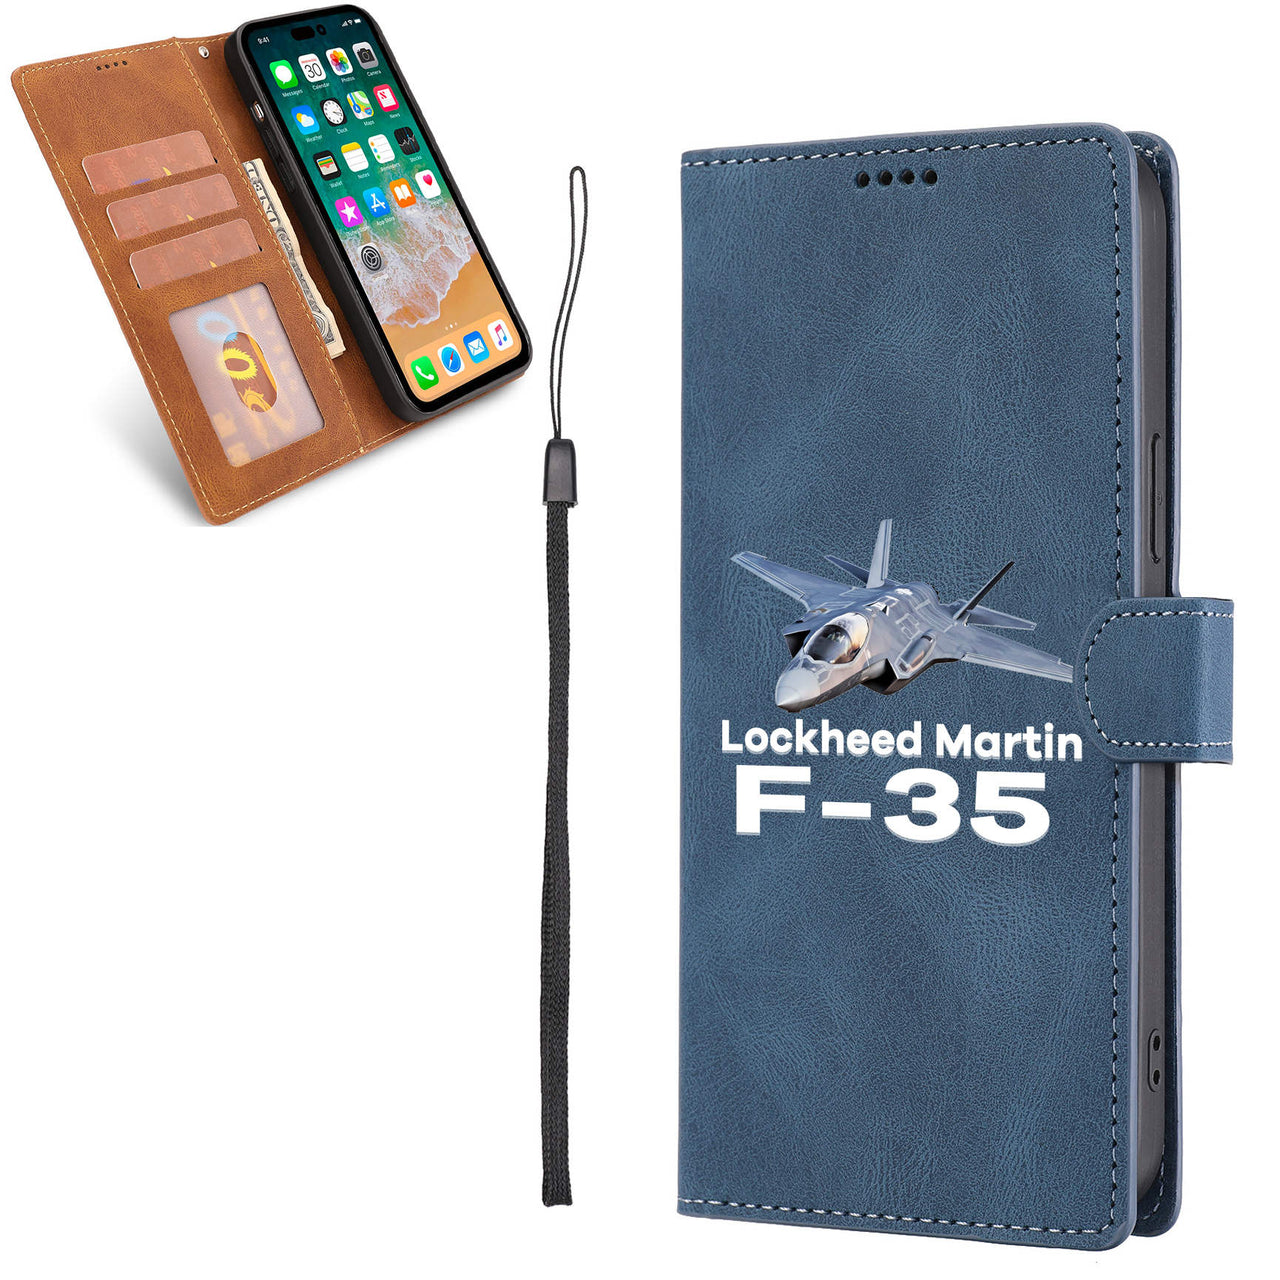 The Lockheed Martin F35 Designed Leather iPhone Cases